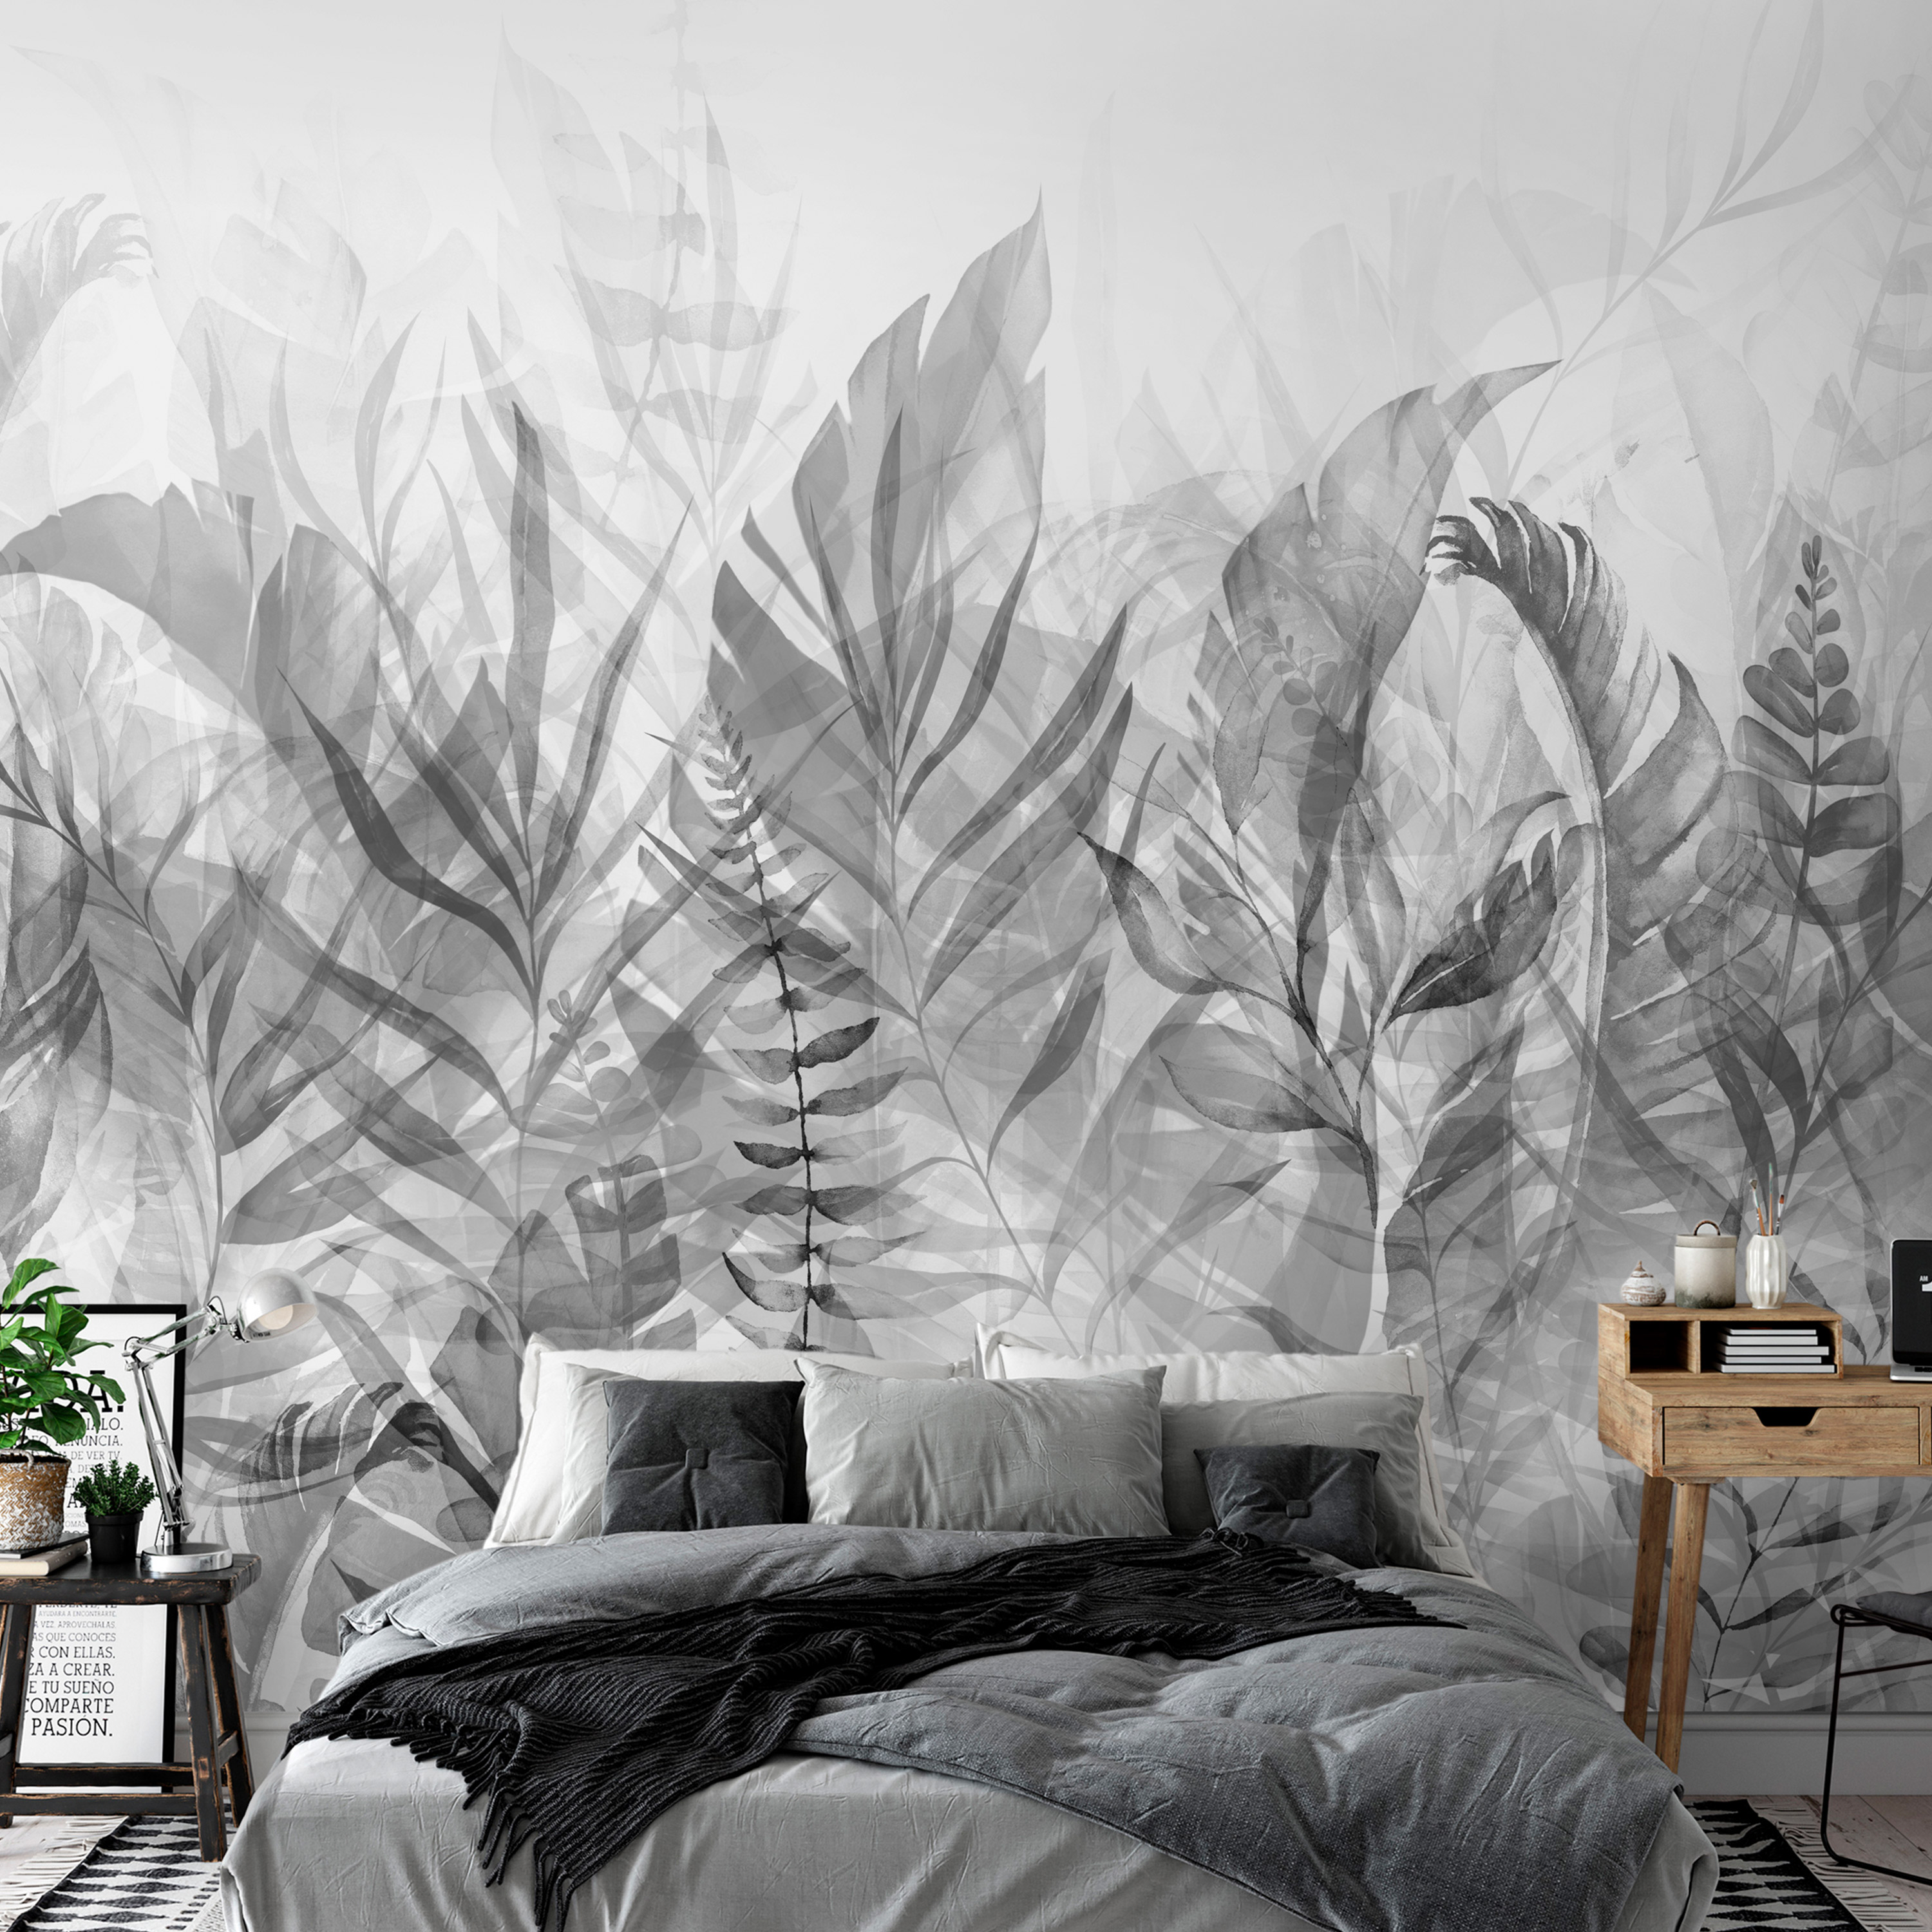 Self-adhesive Wallpaper - Magic Grove (Black and White) - 196x140